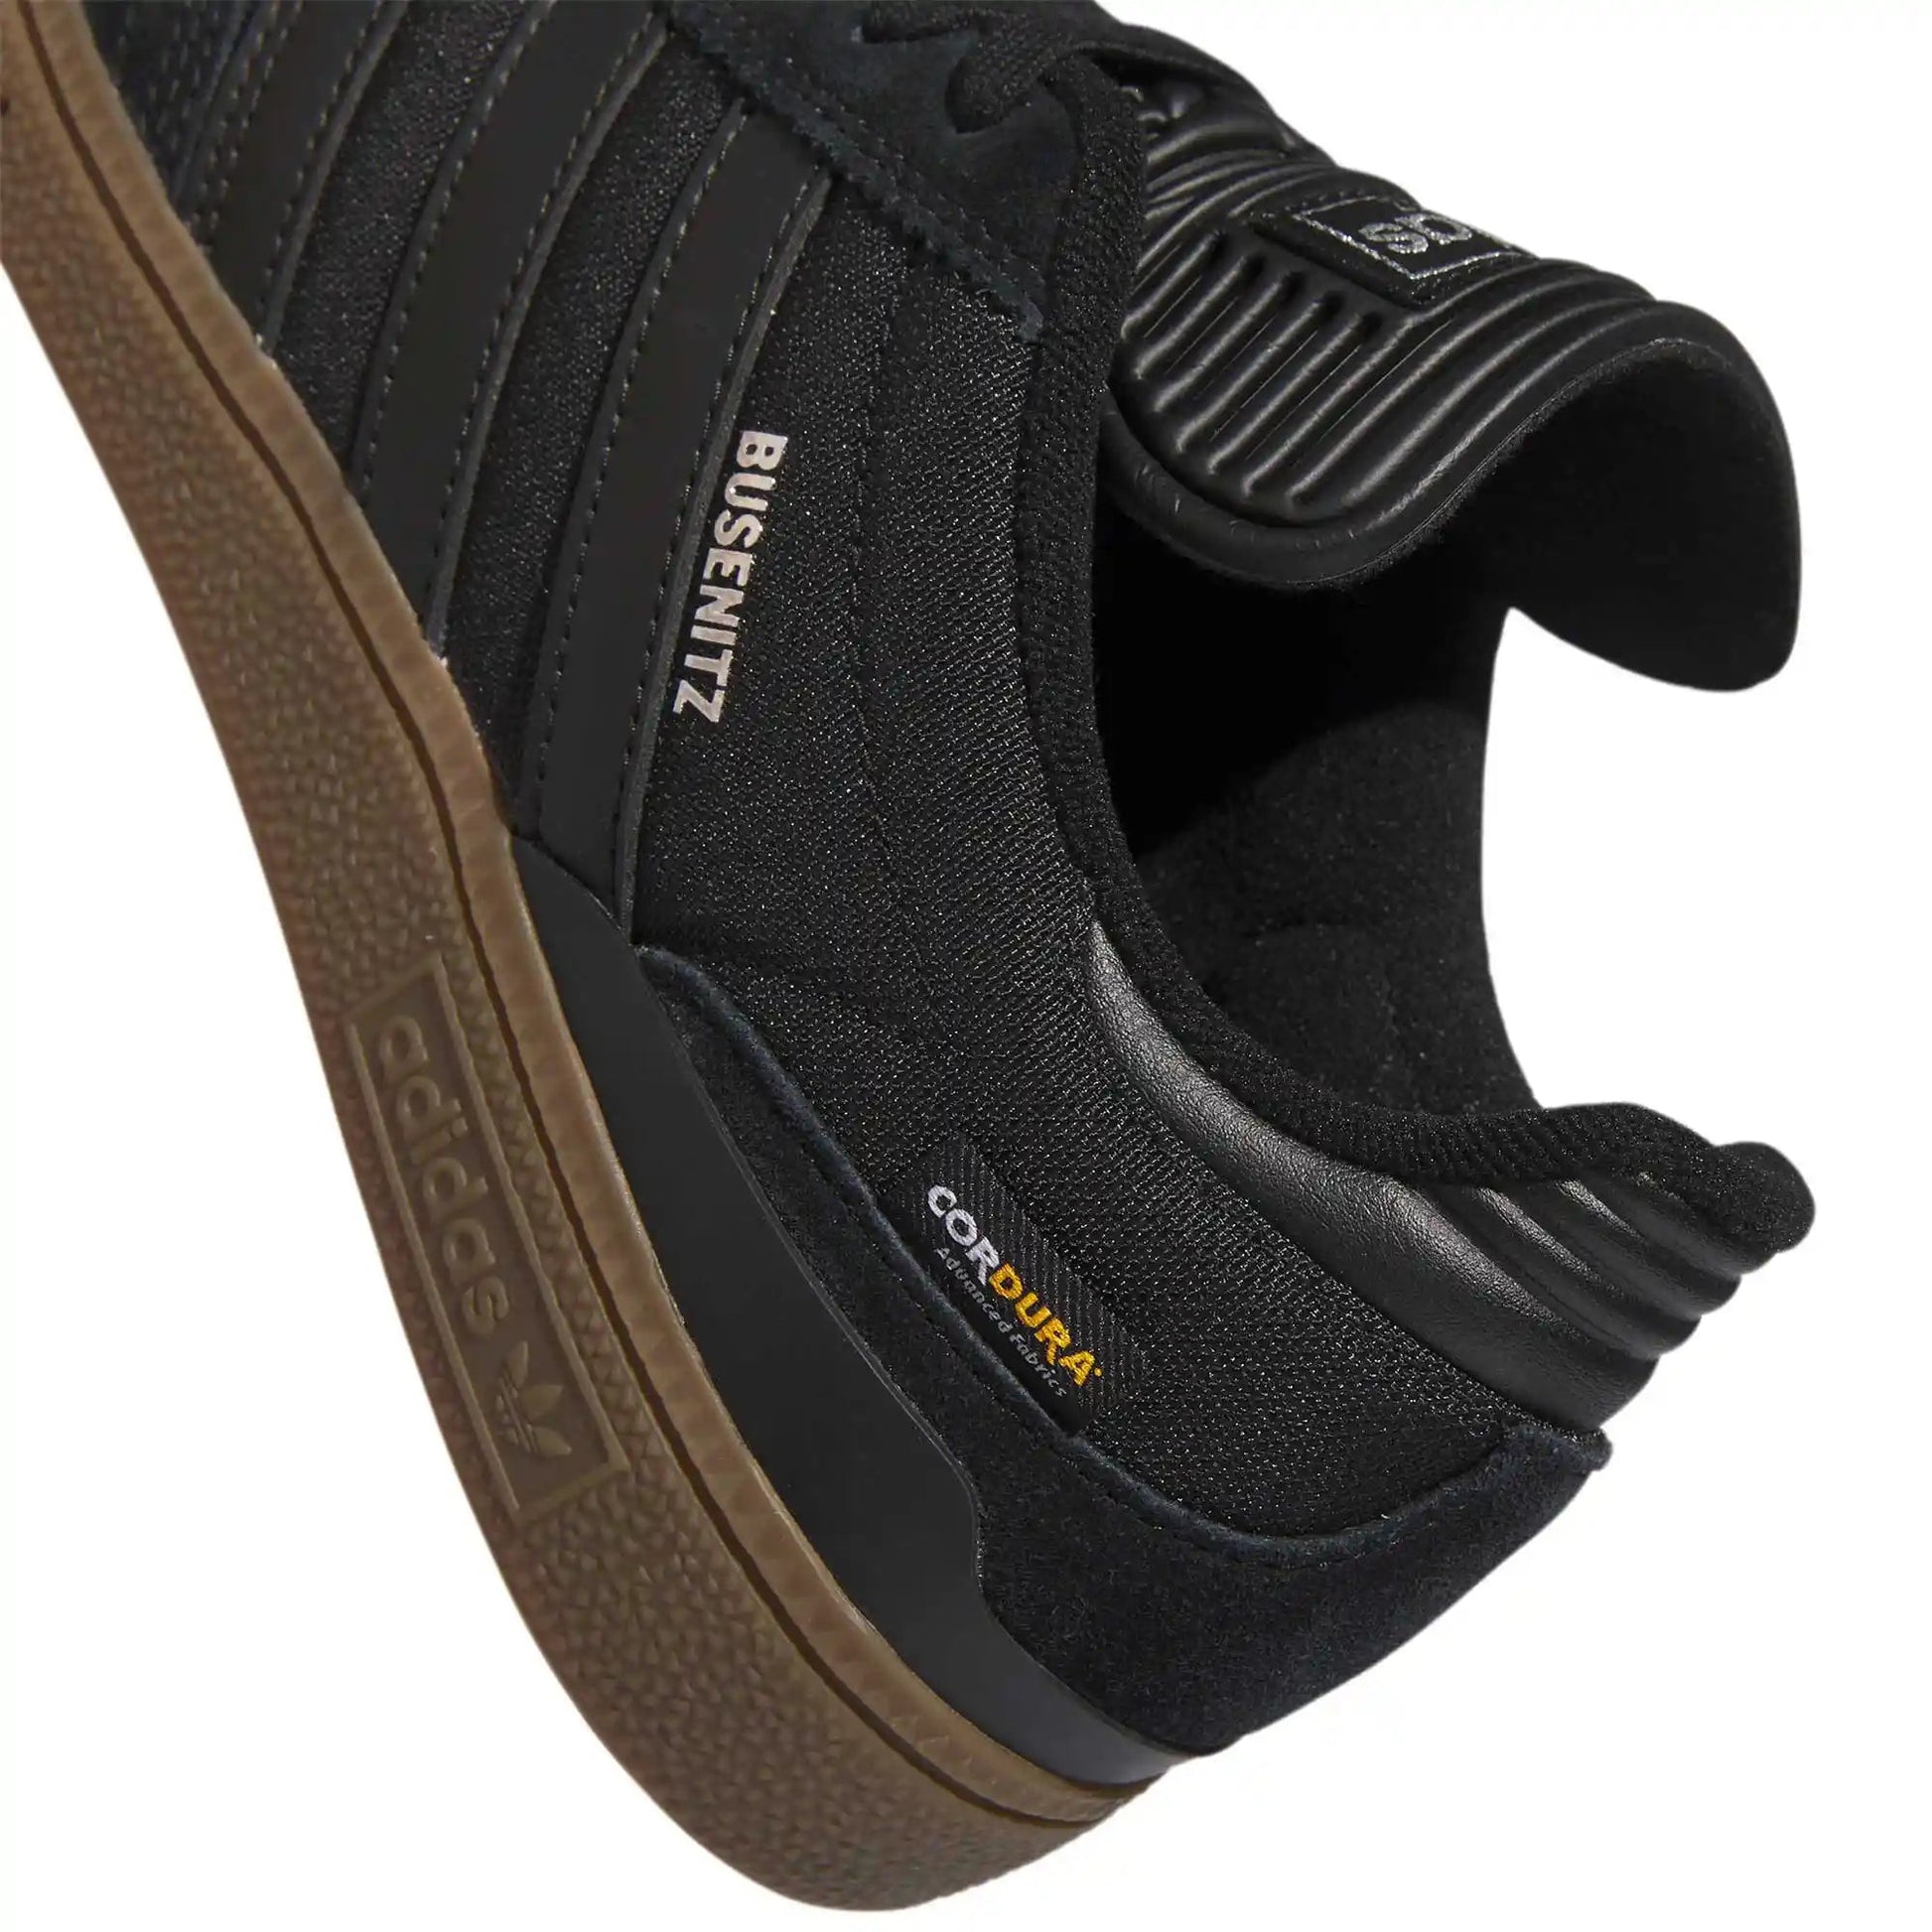 Adidas Busenitz, core black / core black / gum - Tiki Room Skateboards - 8